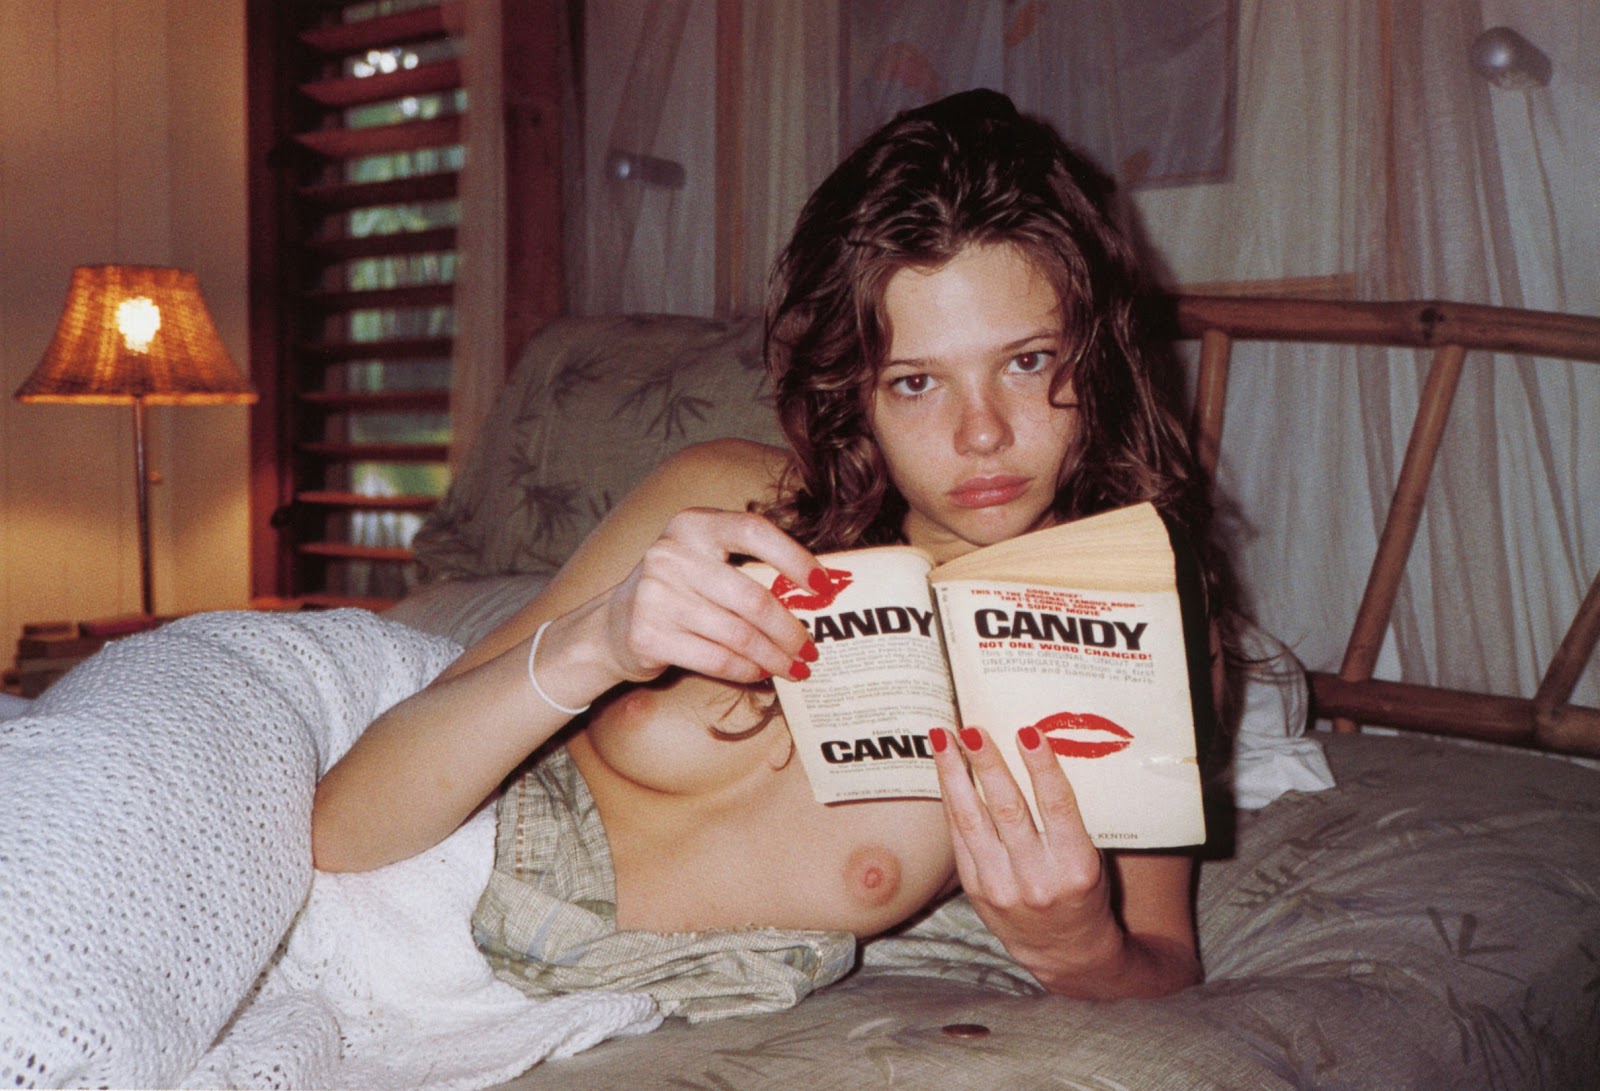 Nude girl reading in bed - Susan Eldridge by Terry Richardson